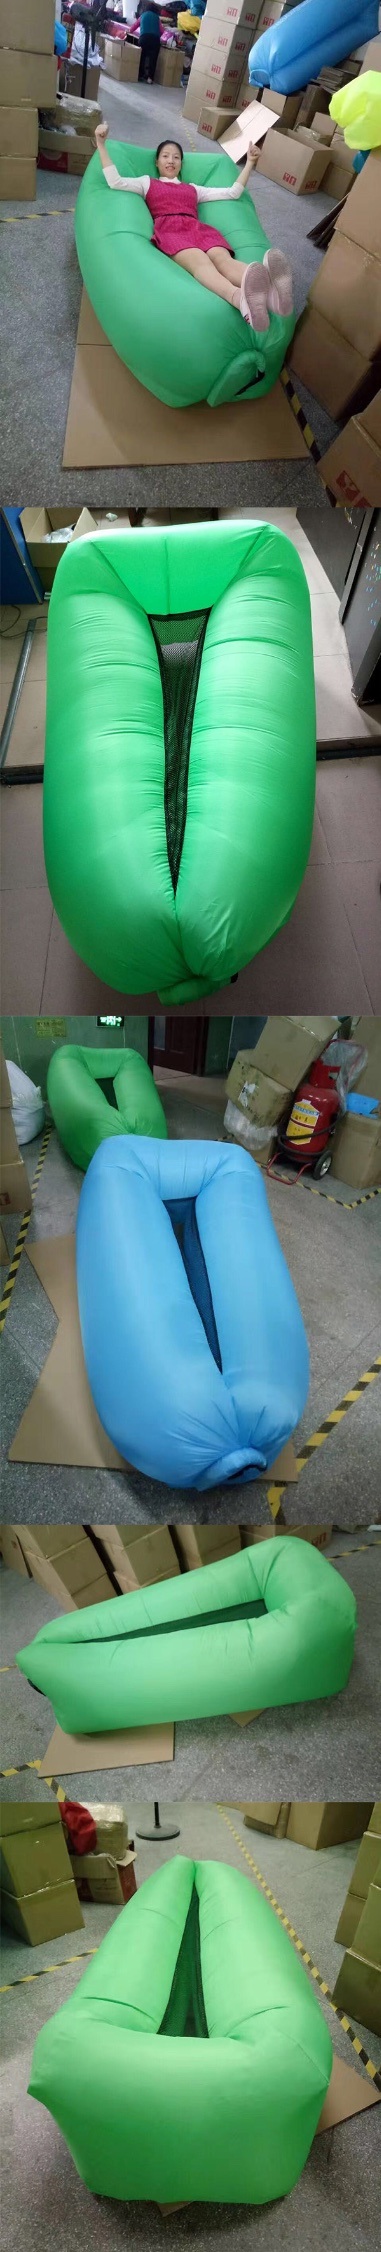 Inflatable Lounge Lamzac Inflatable Lounge Laybag Air Inflatable Lounge Air Sofa Bed Air Lounge Inflatable Lounge